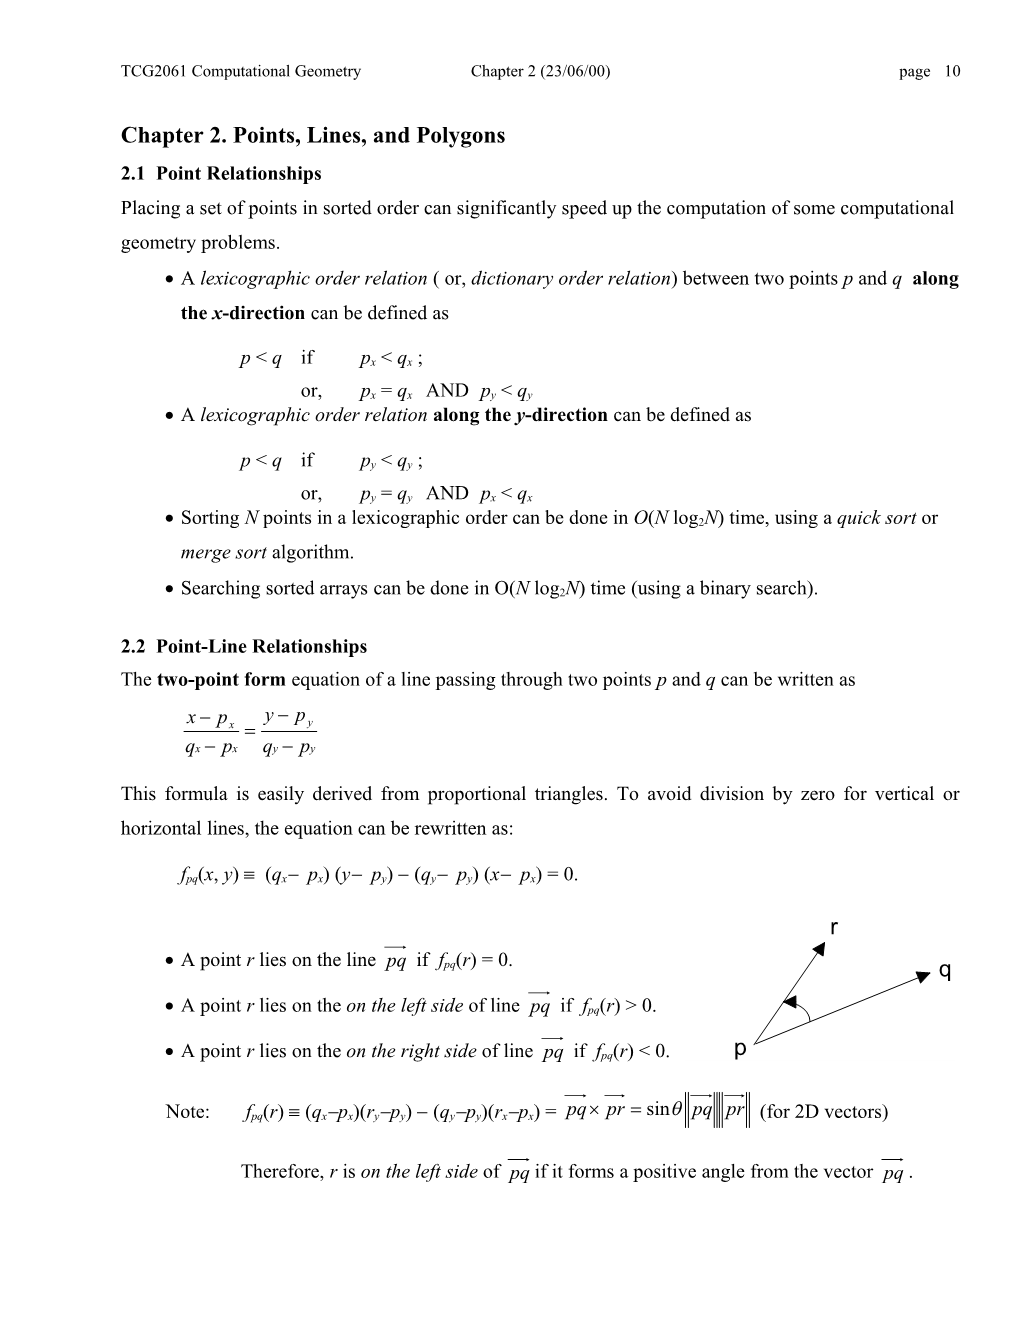 TCG2061 Computational Geometry Chapter 2 (23/06/00) Page